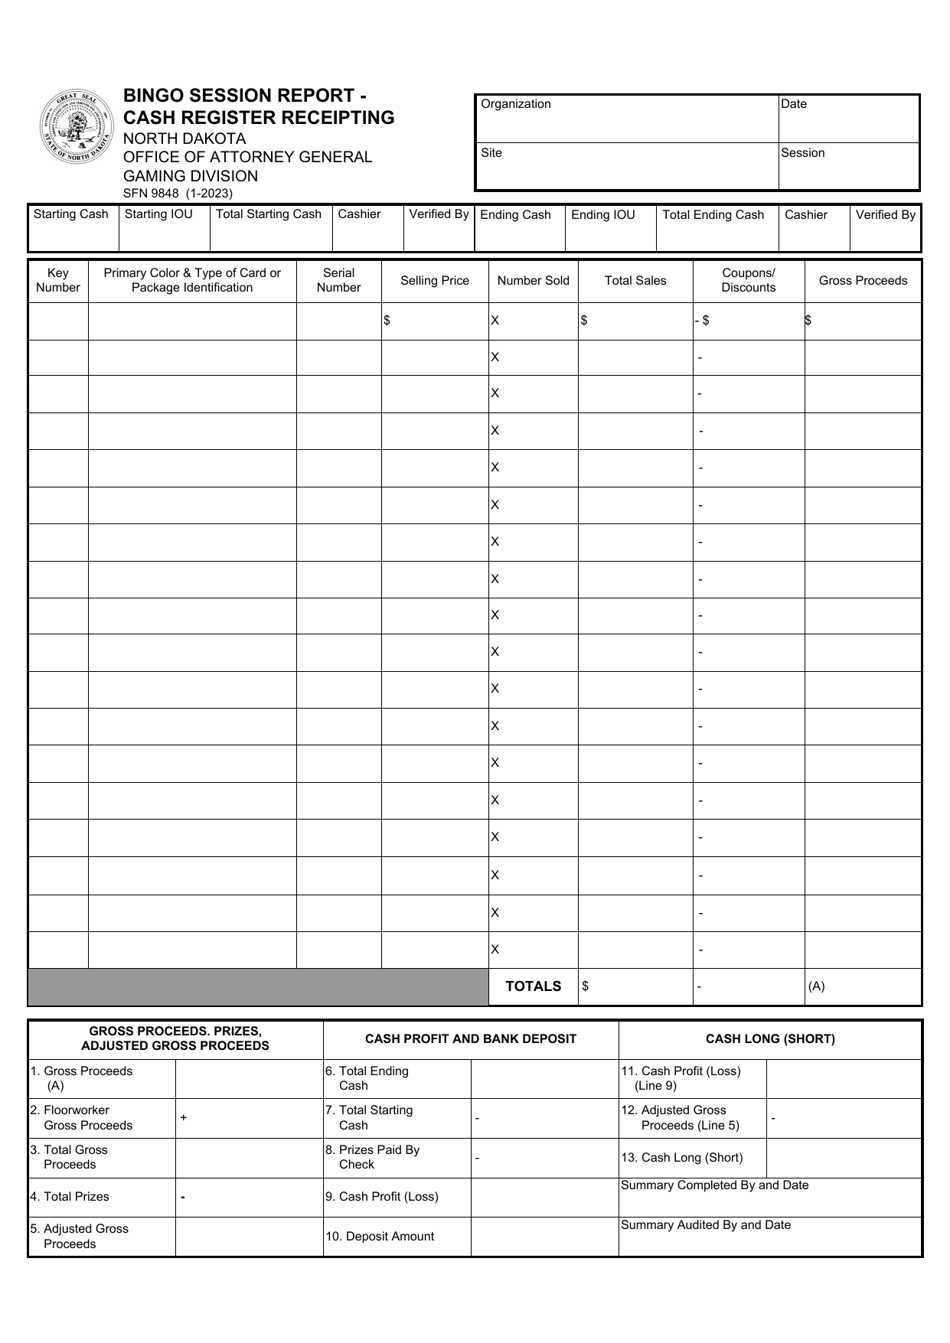 Form SFN9848 Bingo Session Report - Cash Register Receipting - North Dakota, Page 1